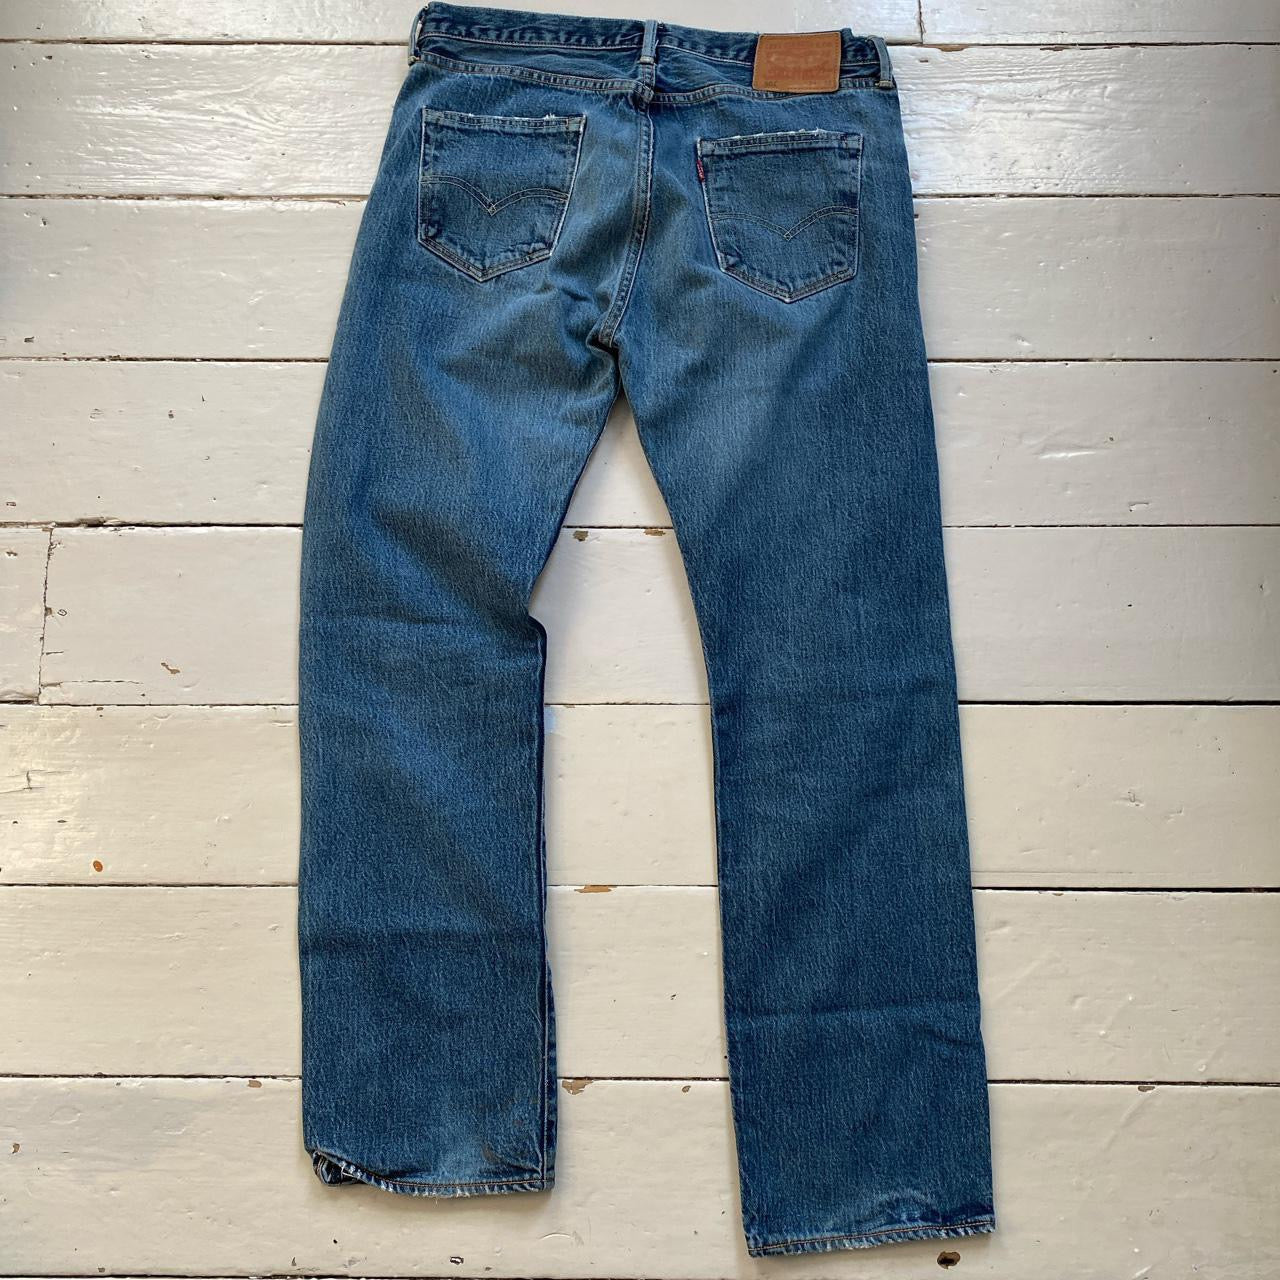 Levis 501 Distressed Jeans (34/32)